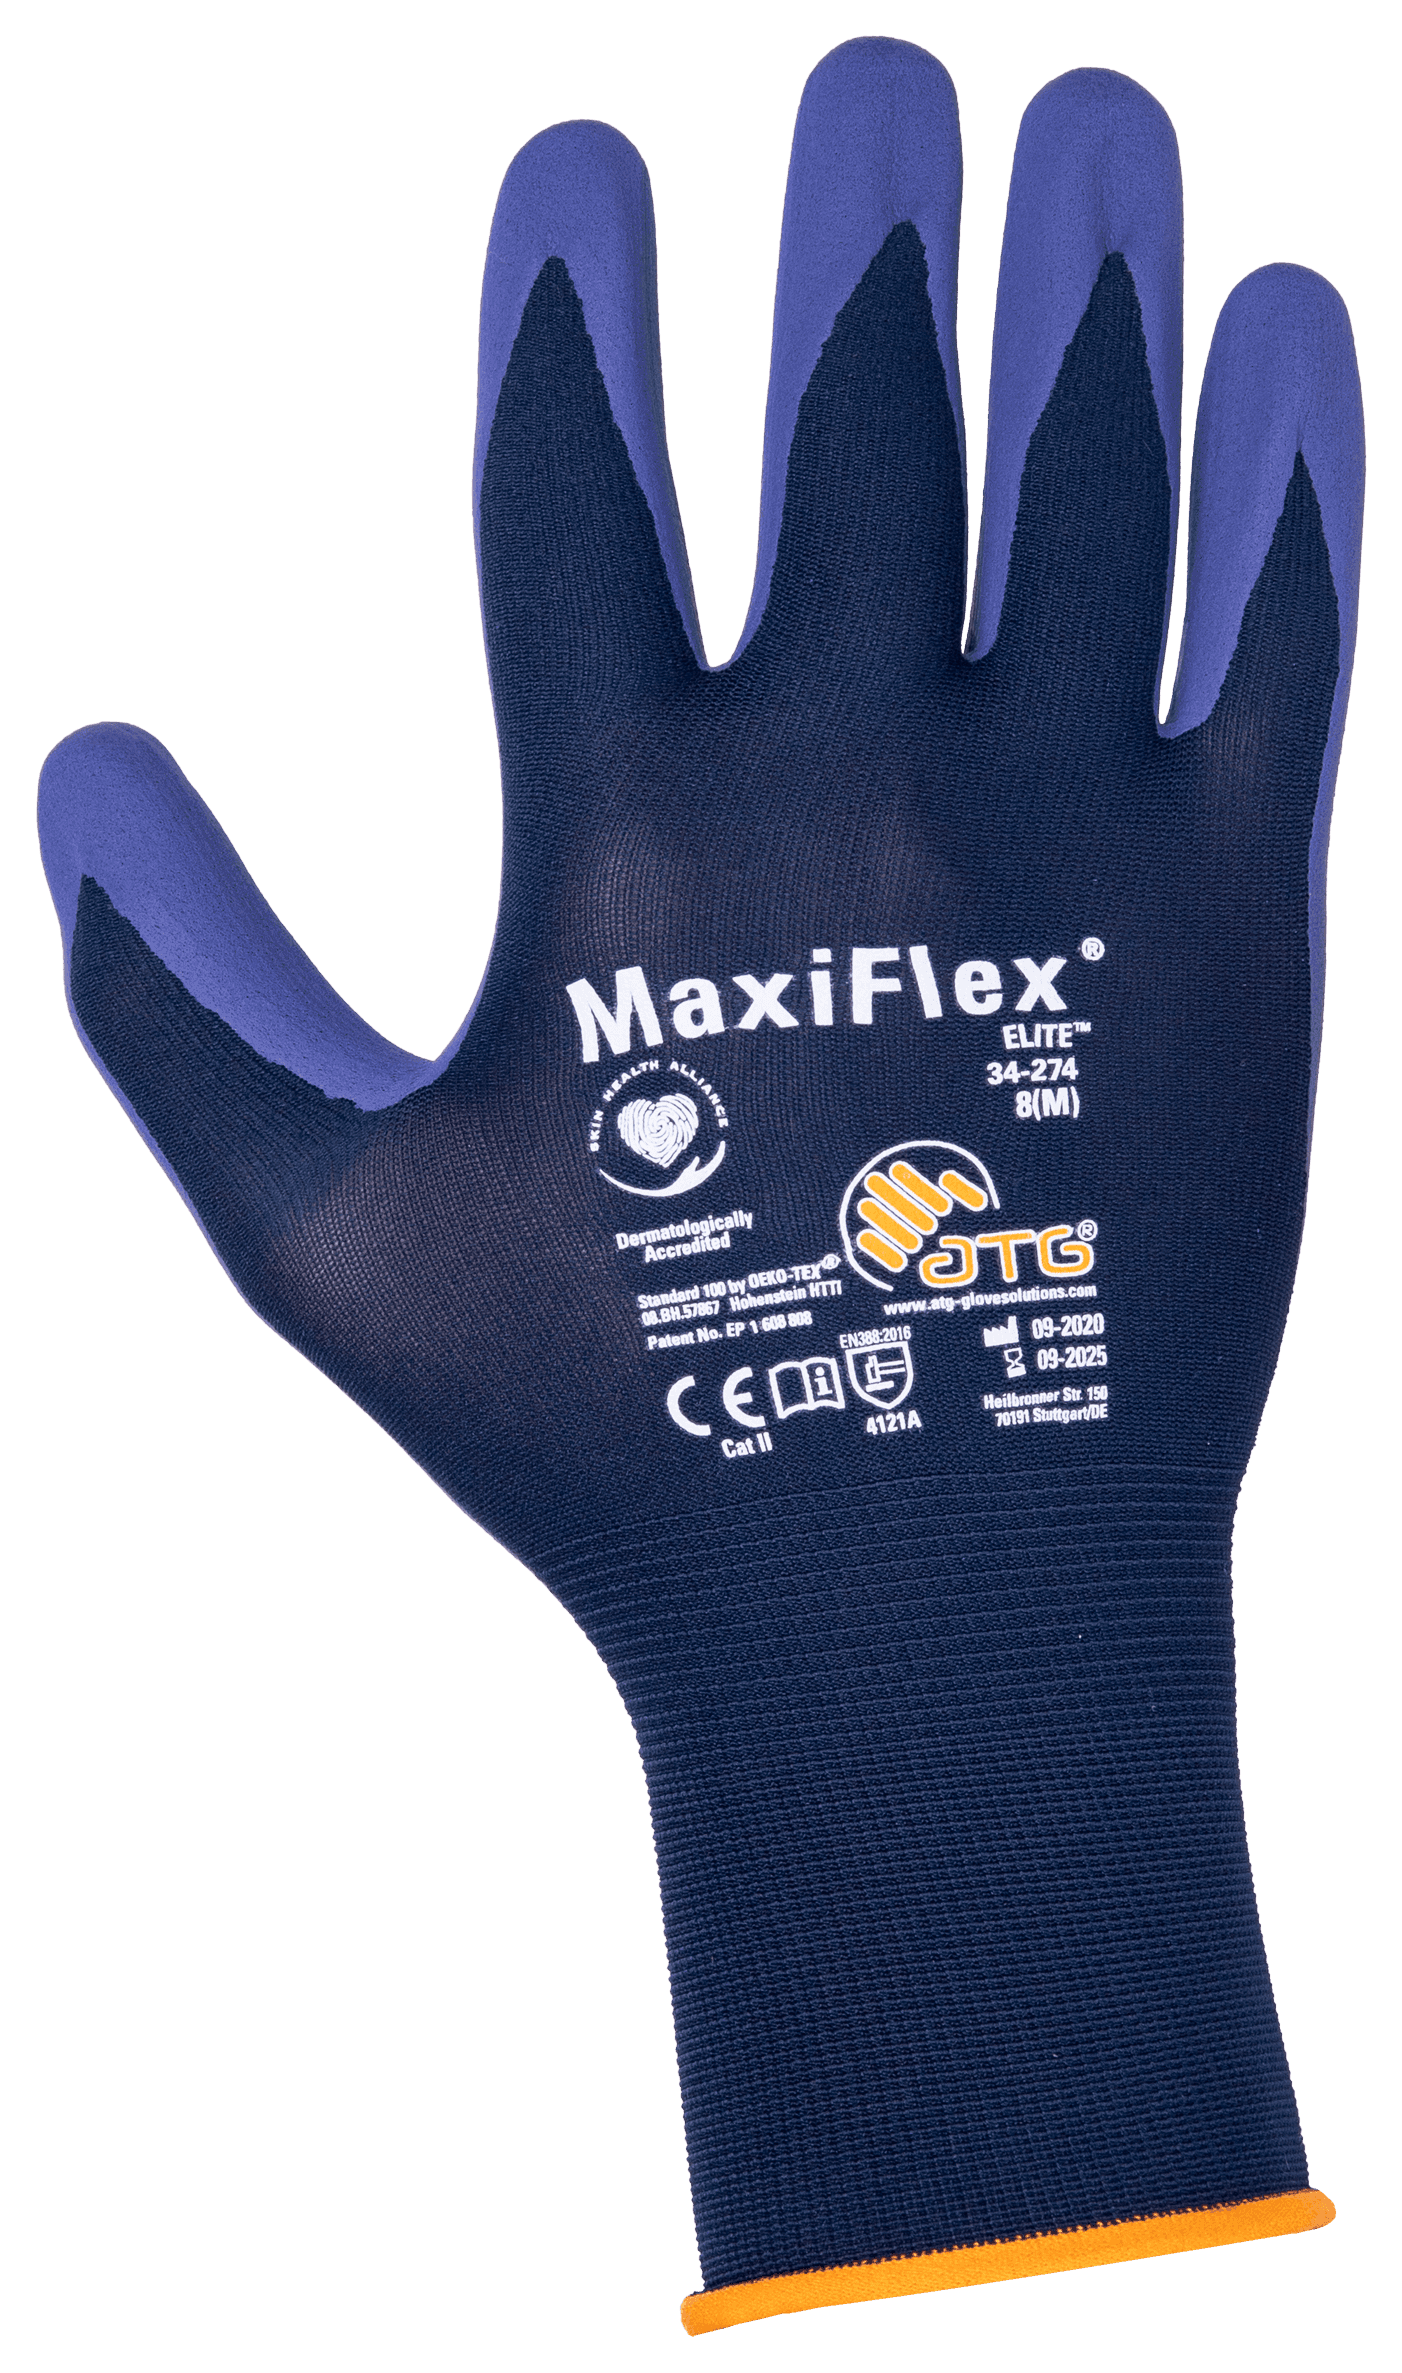 Guantes MaxiFlex Elite 34 274